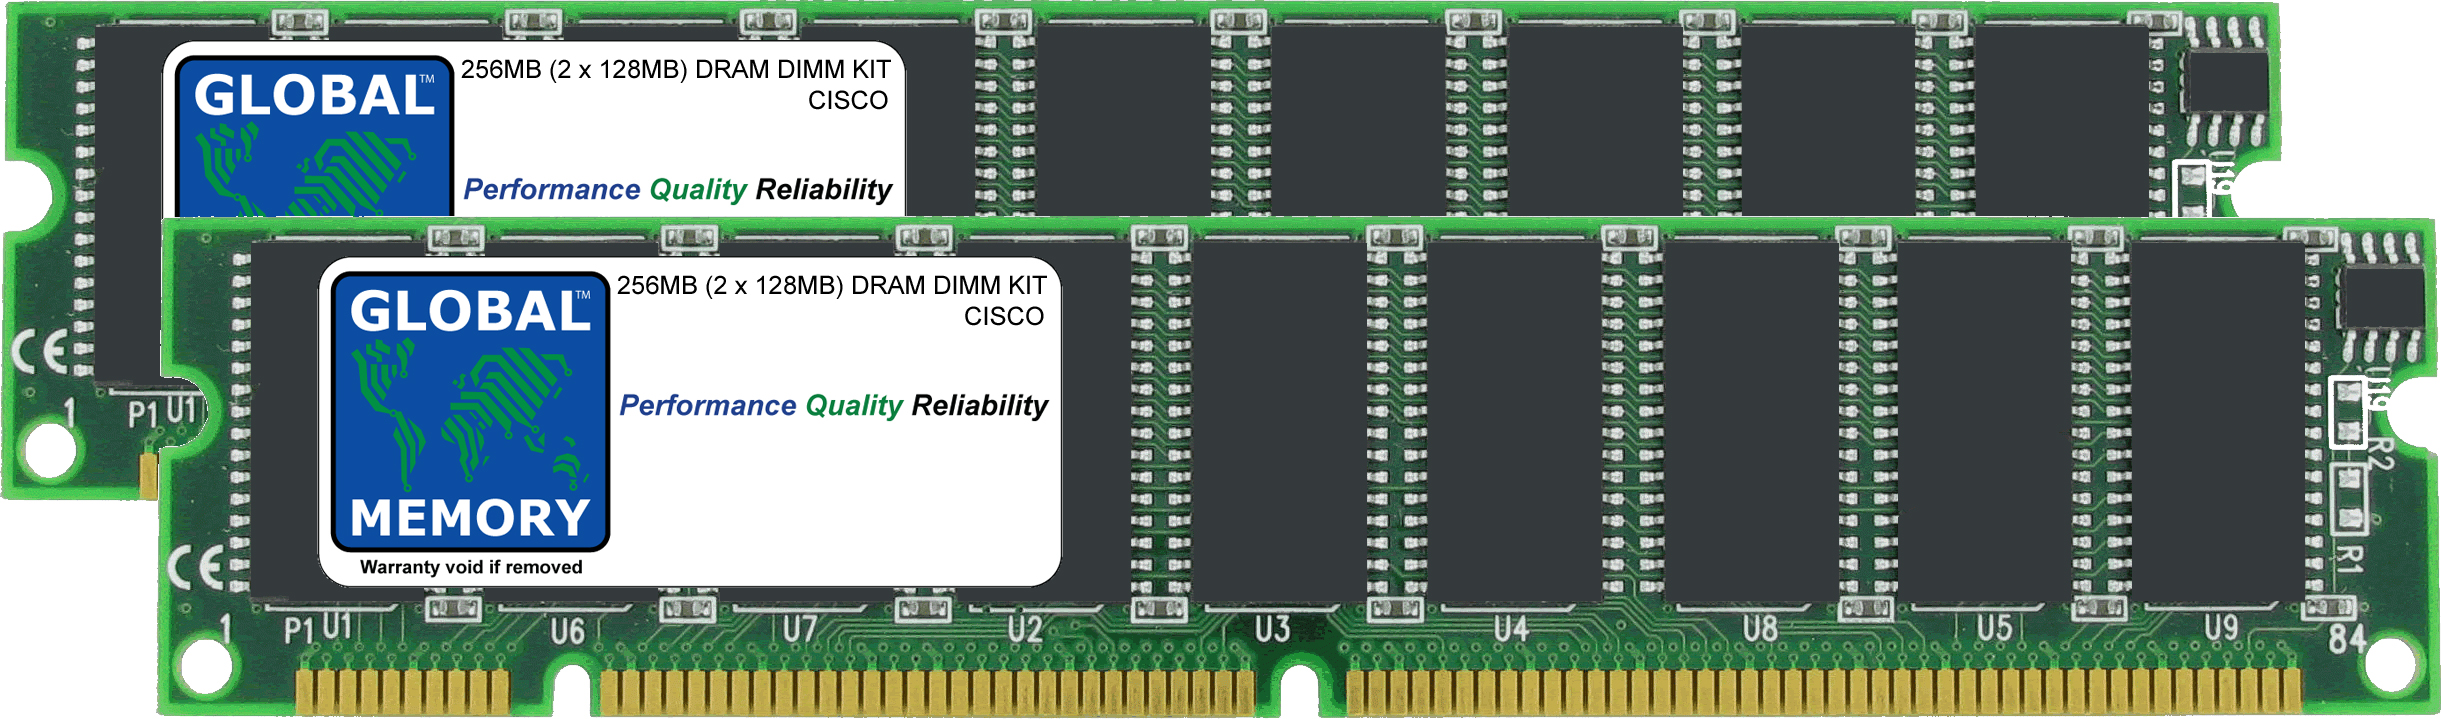 256MB (2 x 128MB) DRAM DIMM MEMORY RAM KIT FOR CISCO 7200 SERIES ROUTERS NPE-175 / 225 / 300 & NSE-1 / 1-7206 VXR (MEM-SD-NPE-256MB)